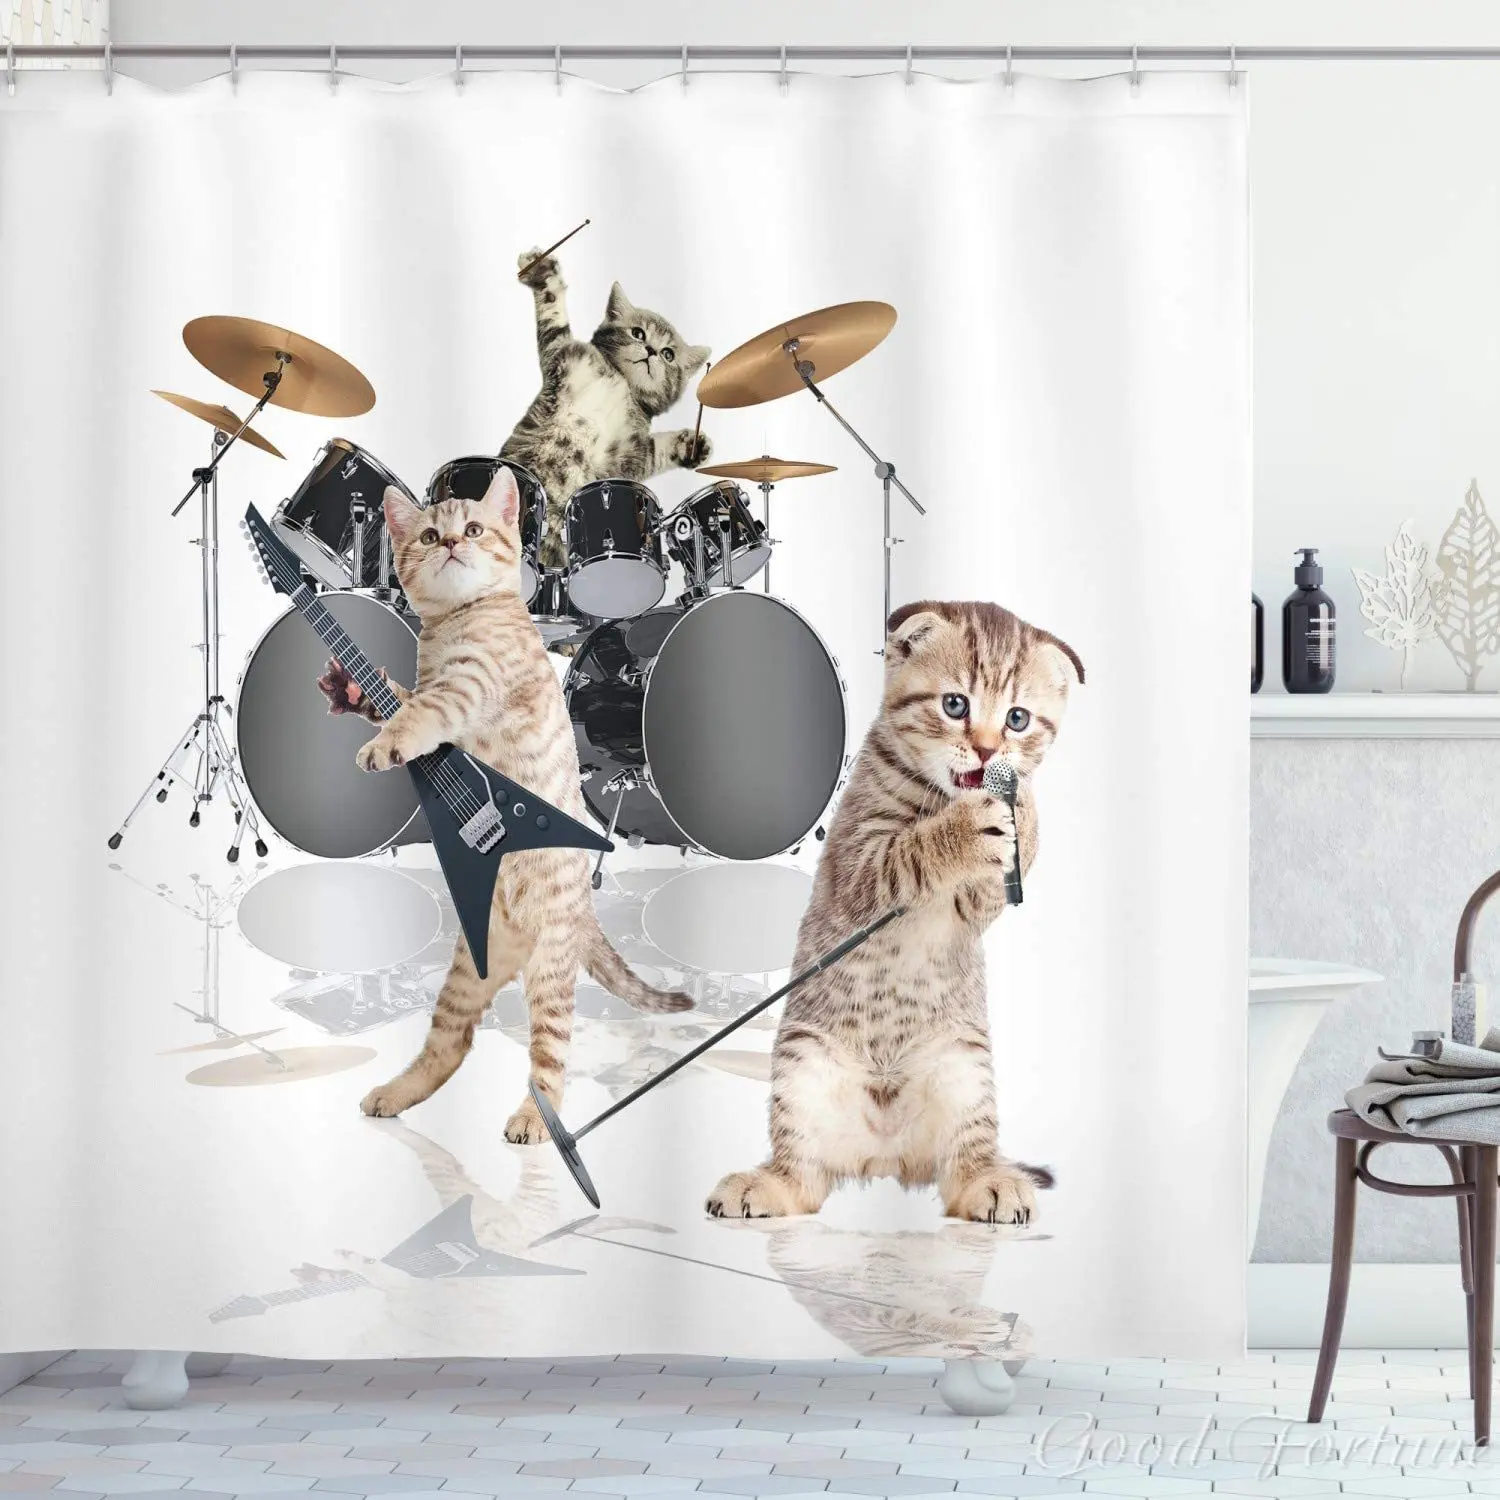 Animal Shower Curtain Cool Fancy Hard Cute Rocker Band Of Kittens With Singer Guitarist Cats Artwork Print Bathroom Decor